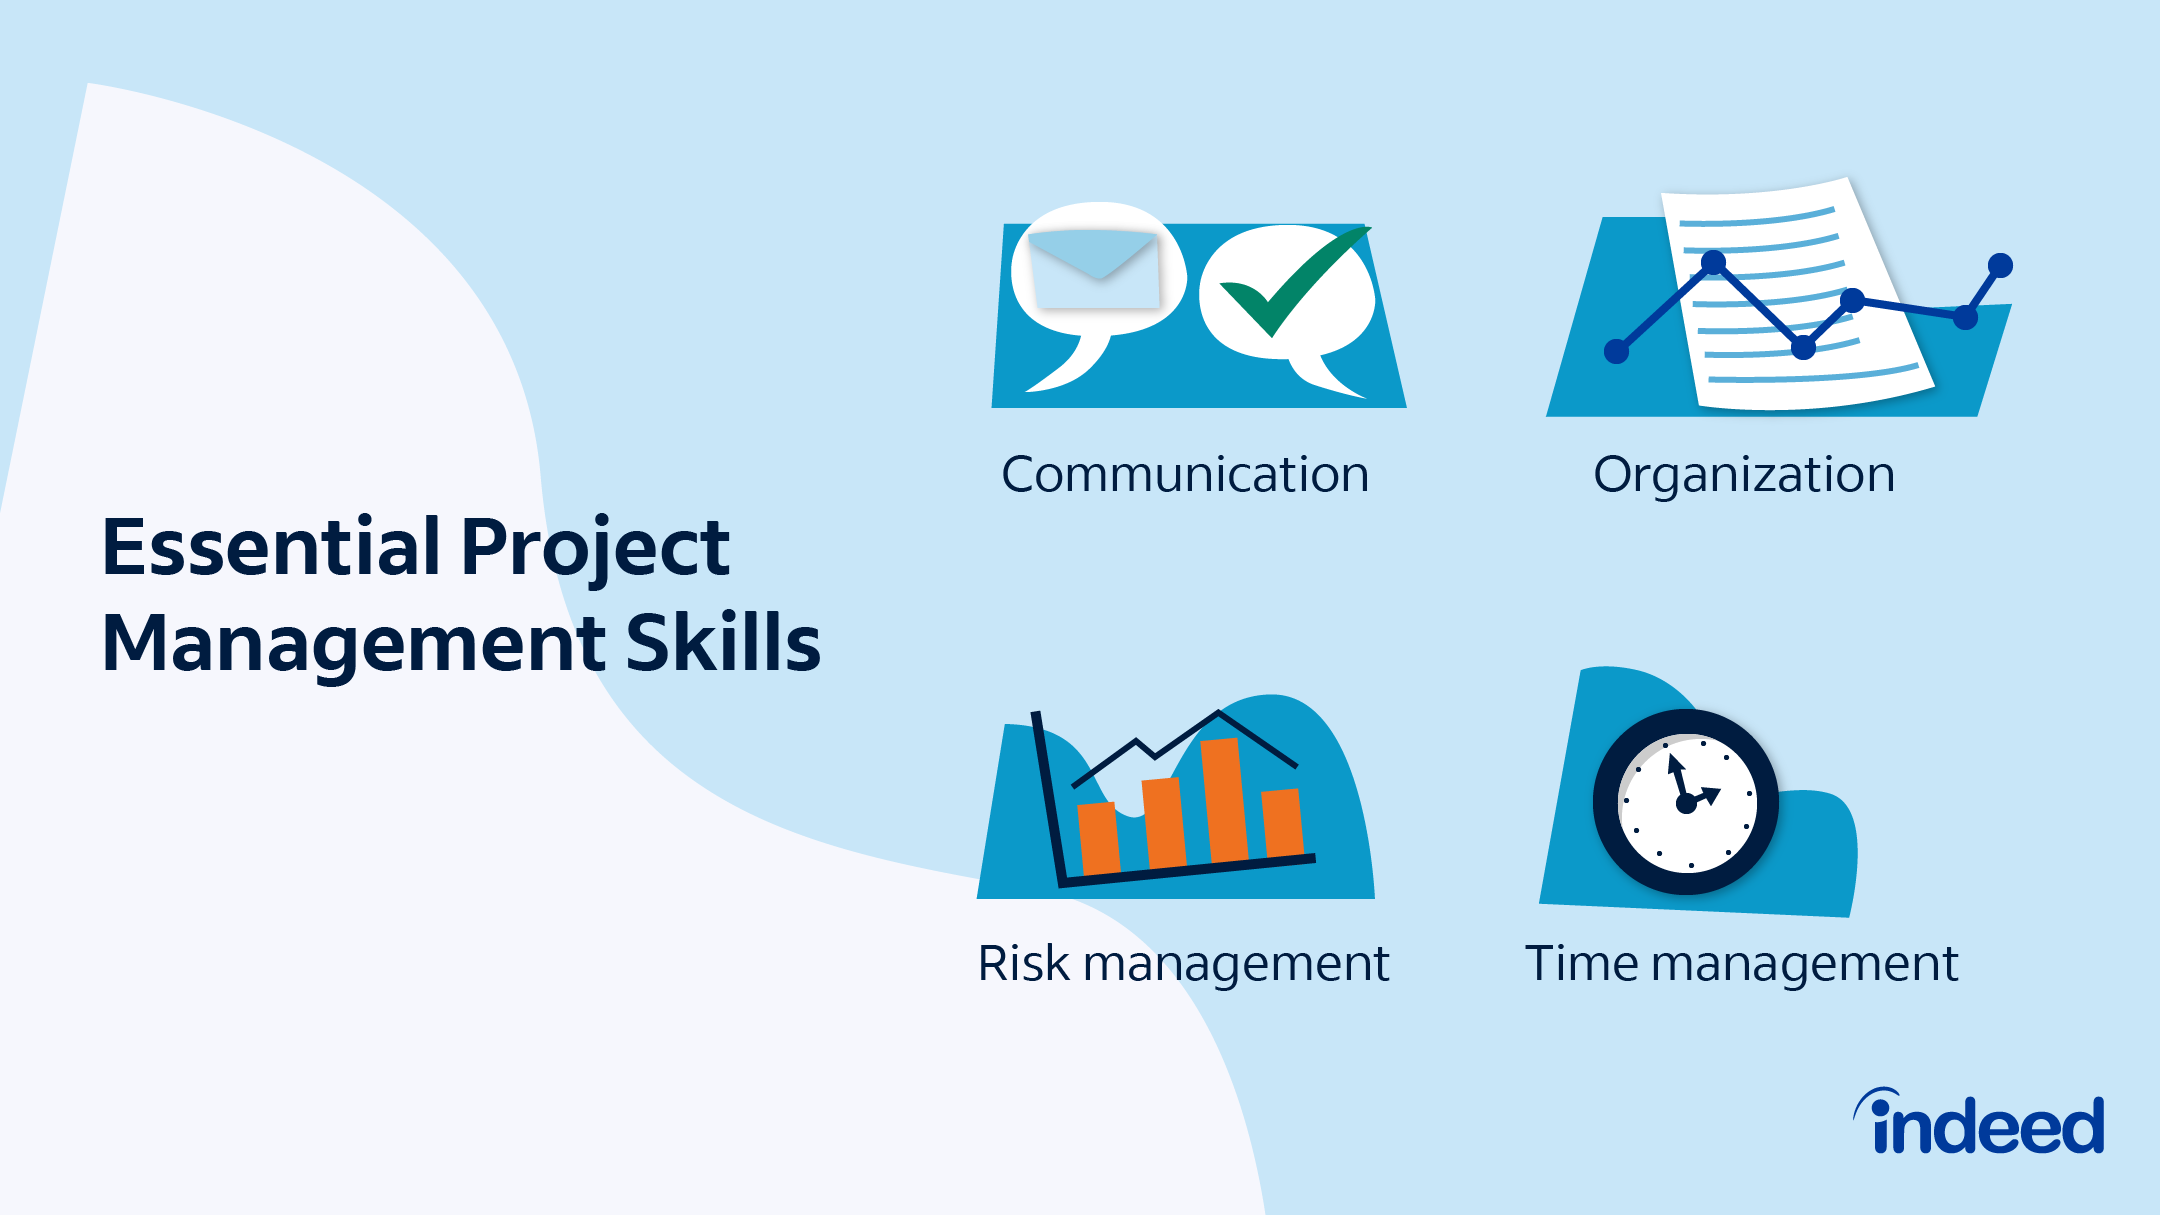 7 Essential Time Management Skills